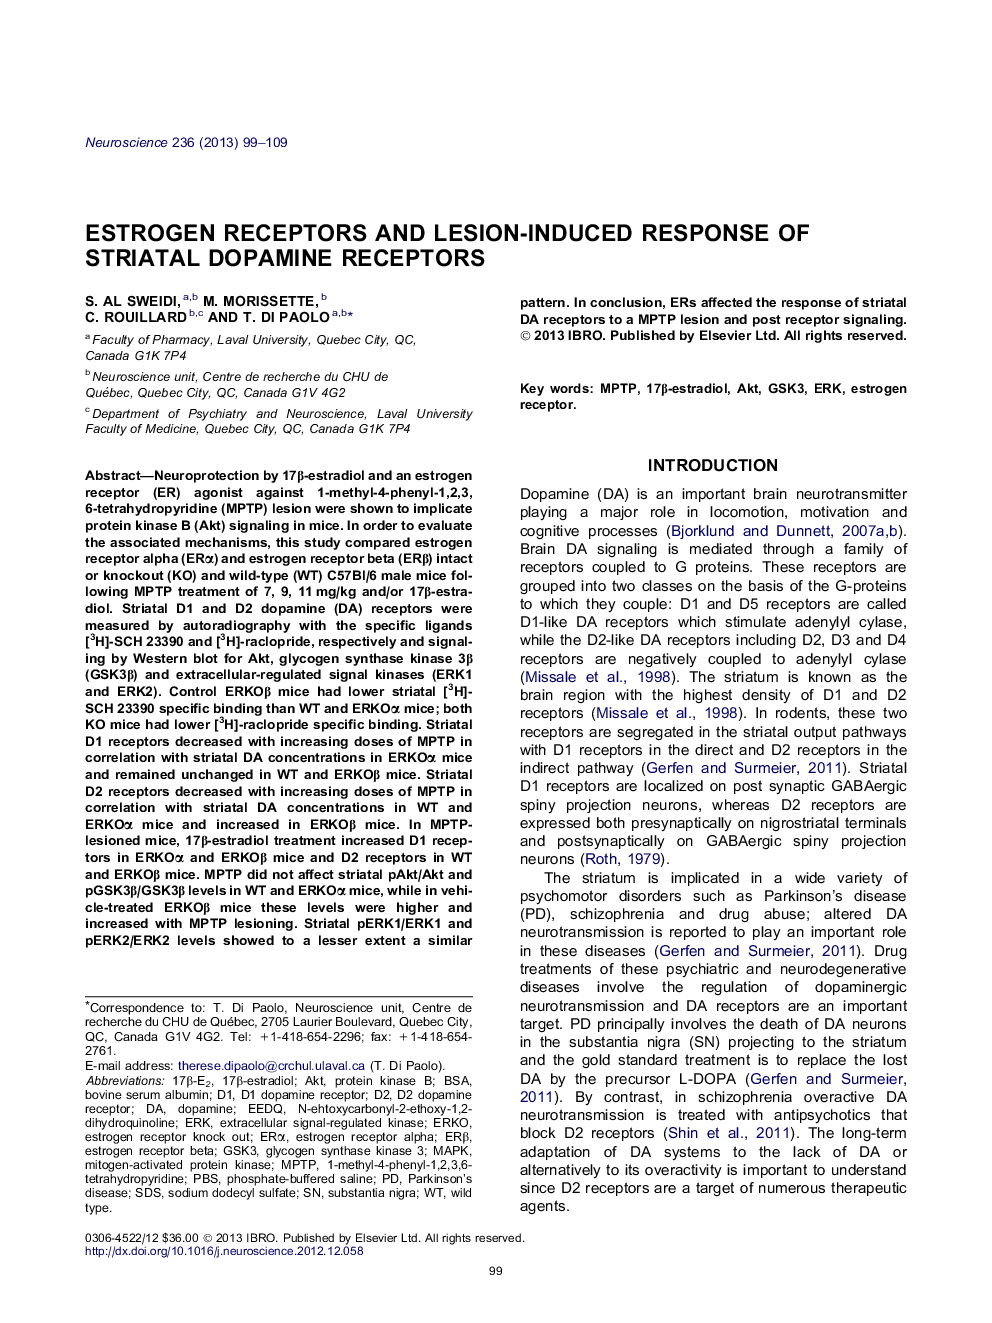 Estrogen receptors and lesion-induced response of striatal dopamine receptors